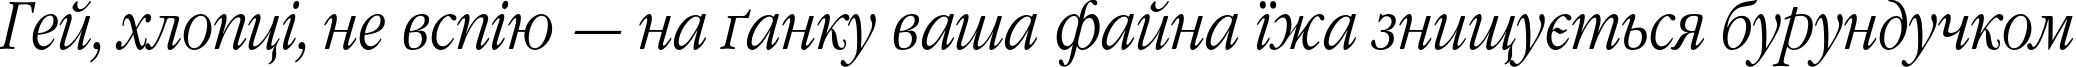 Пример написания шрифтом GaramondNarrowC Italic текста на украинском